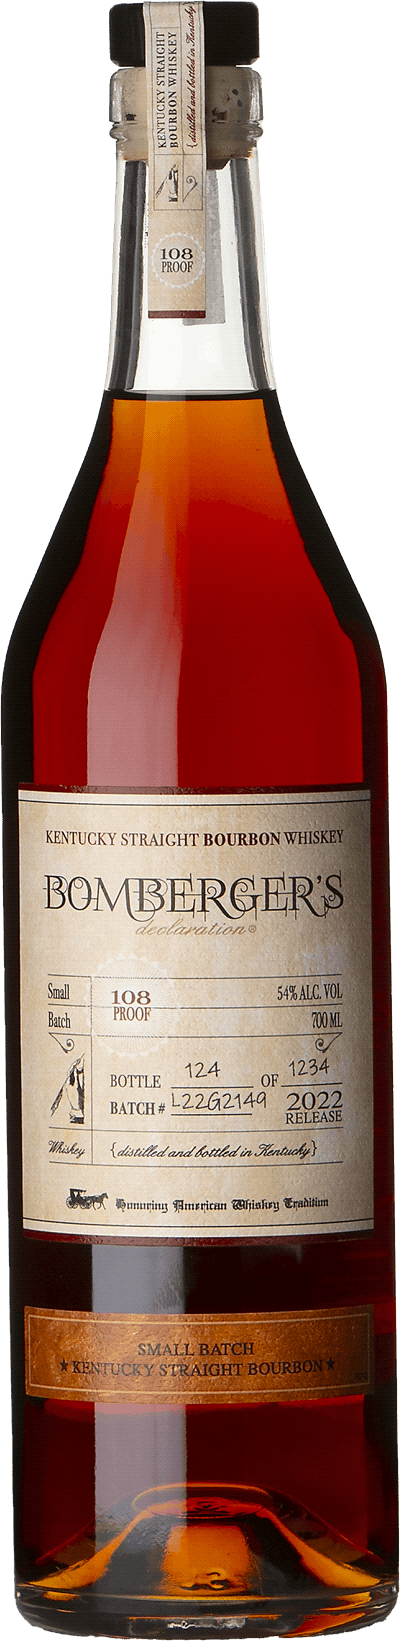 Michter's Distillery Bomberger's Declaration Bourbon